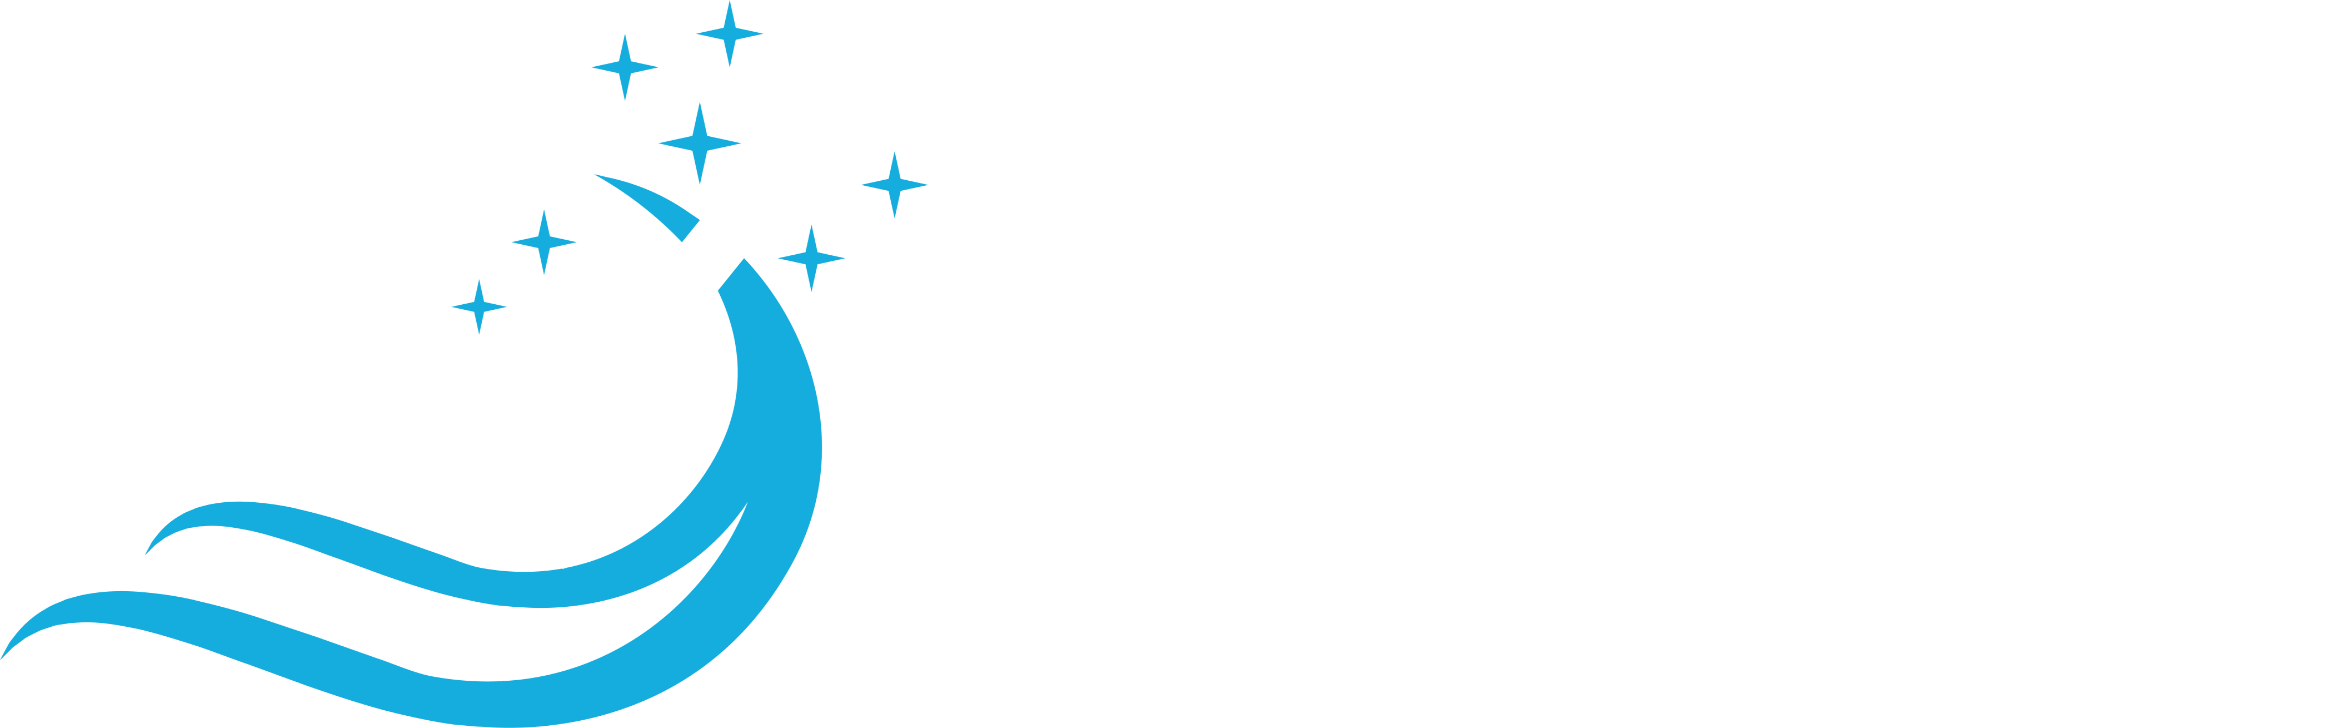 house cleaning bradenton fl logo 2